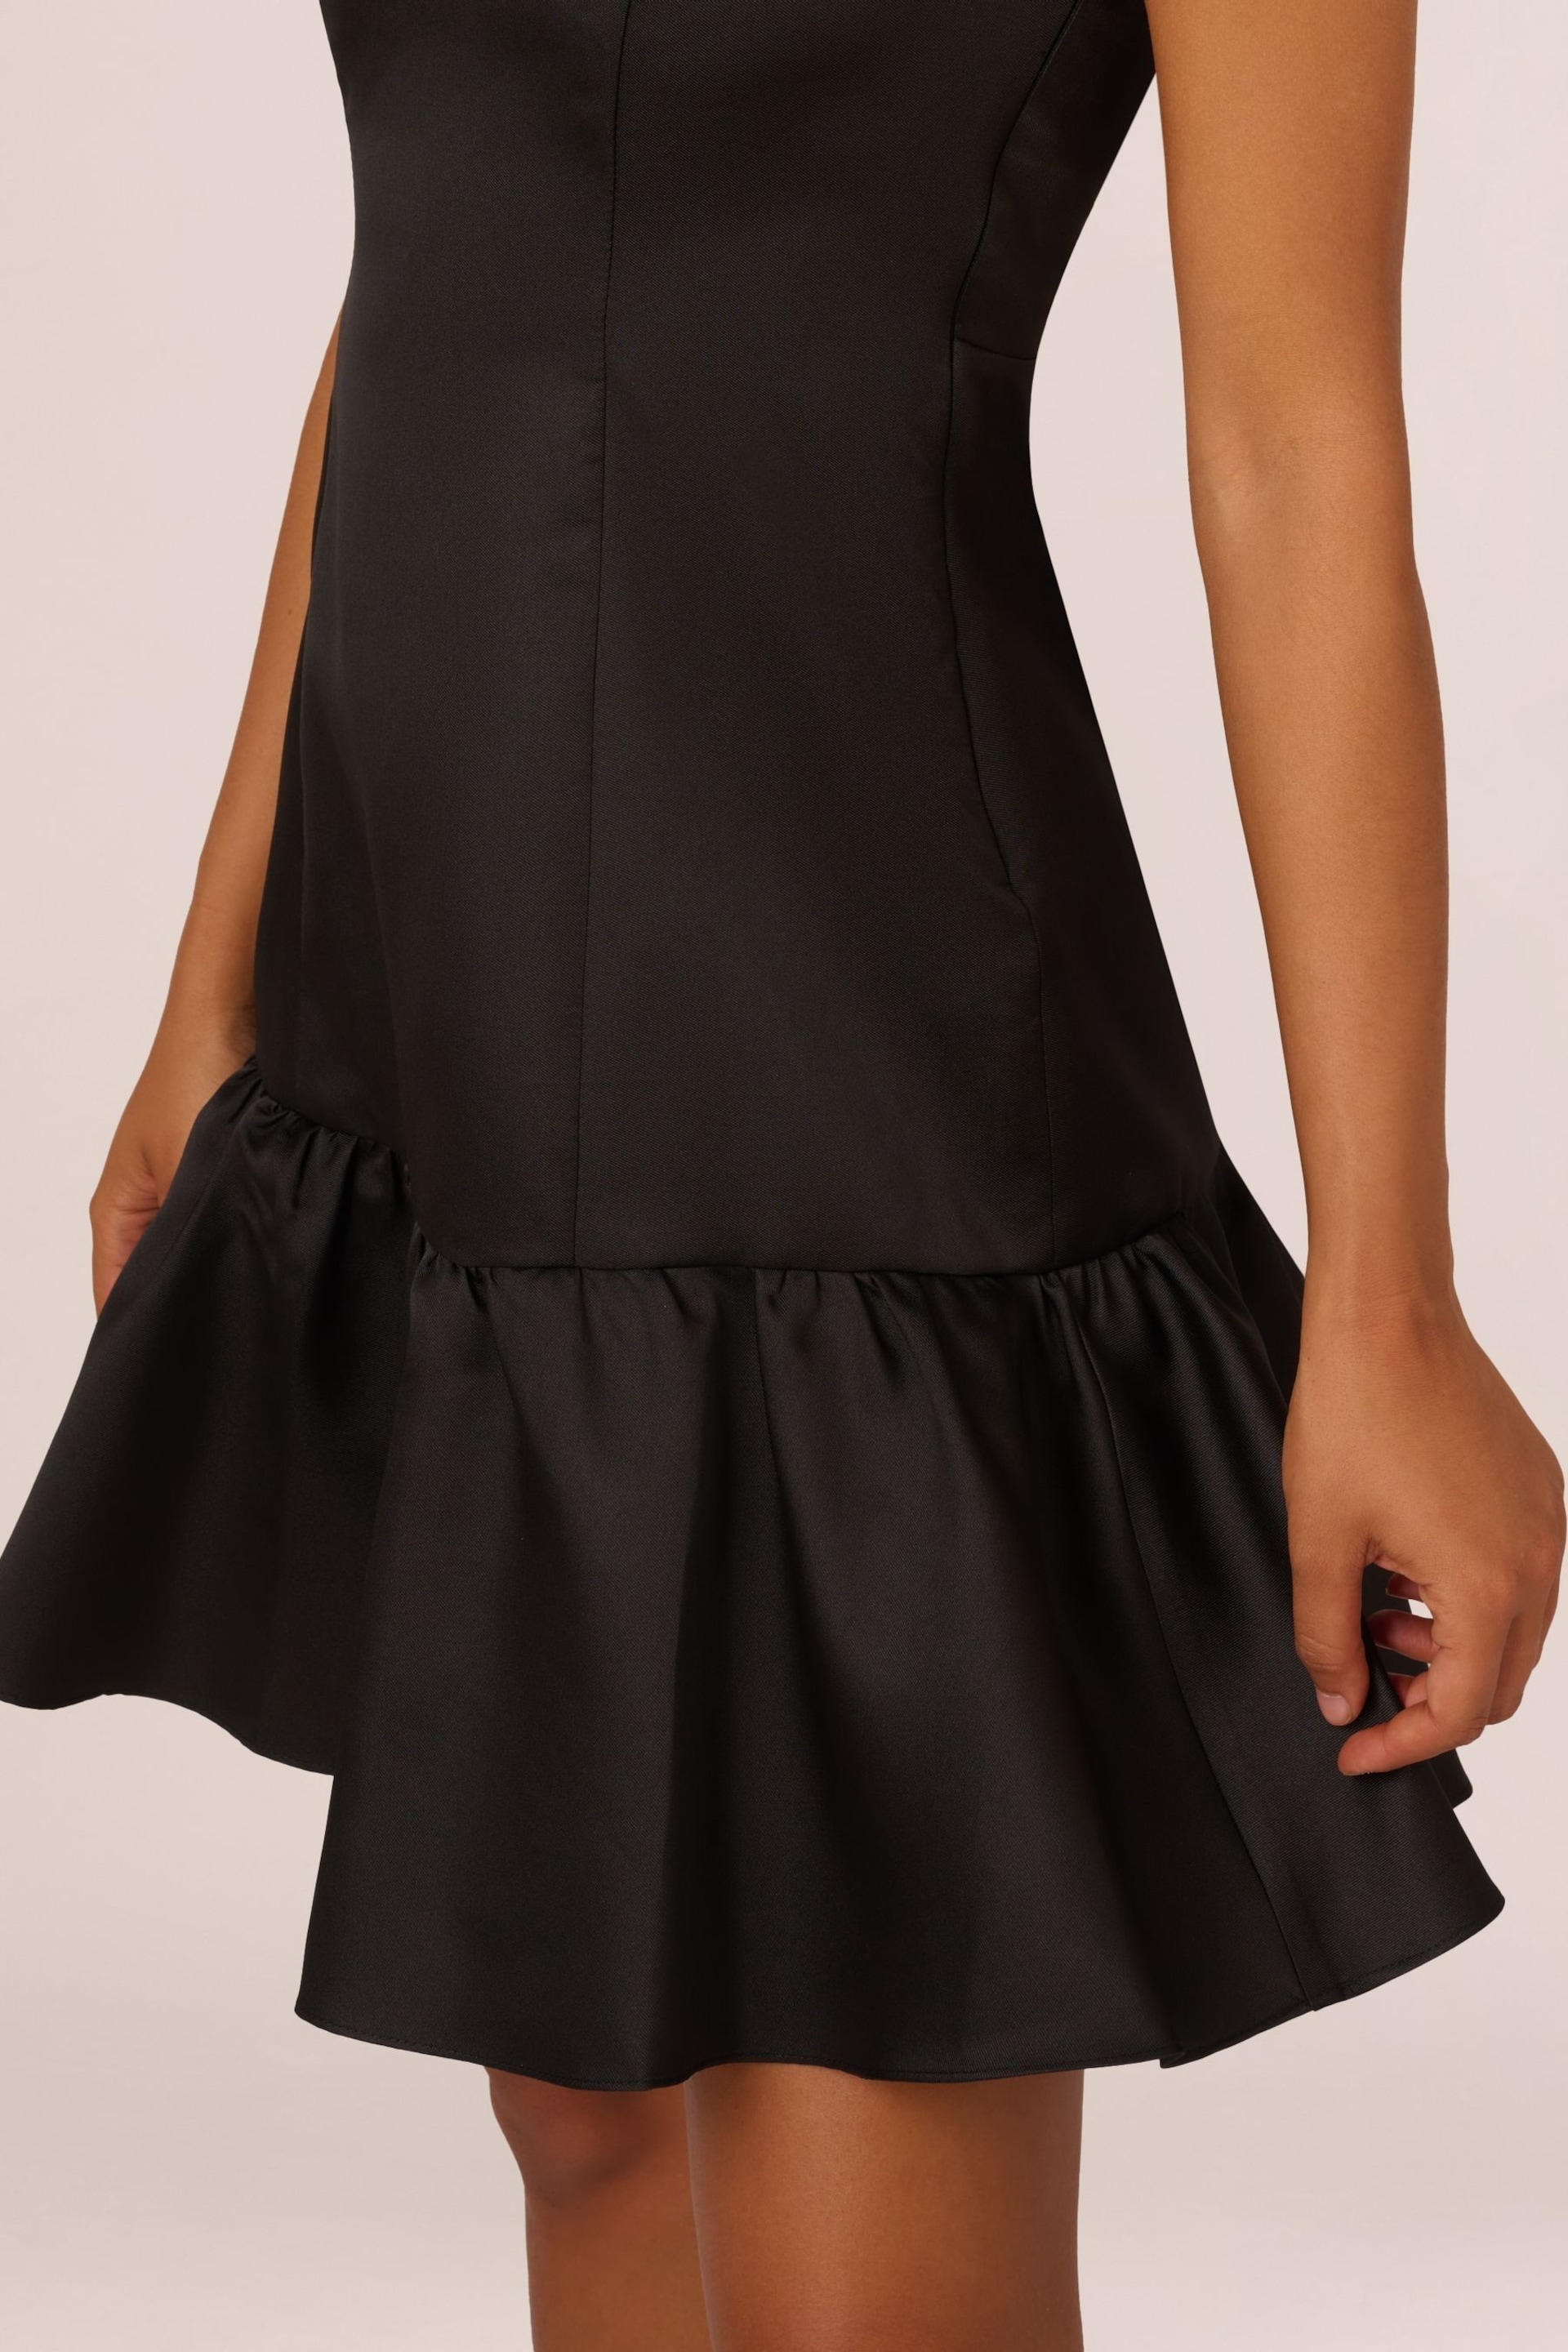 Adrianna Papell Mikado Flounce Hem Black Midi Dress - Image 7 of 7